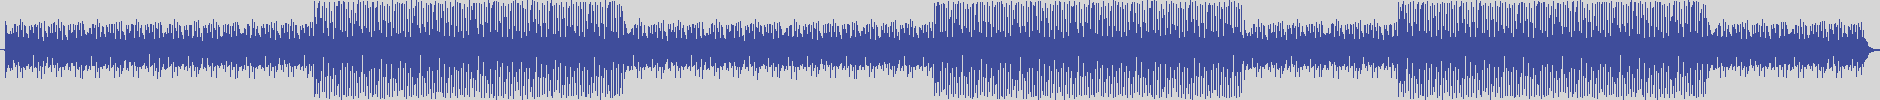 nf_boyz_records [NFY069] Cubo Boys - Baby Park [Original Mix] audio wave form